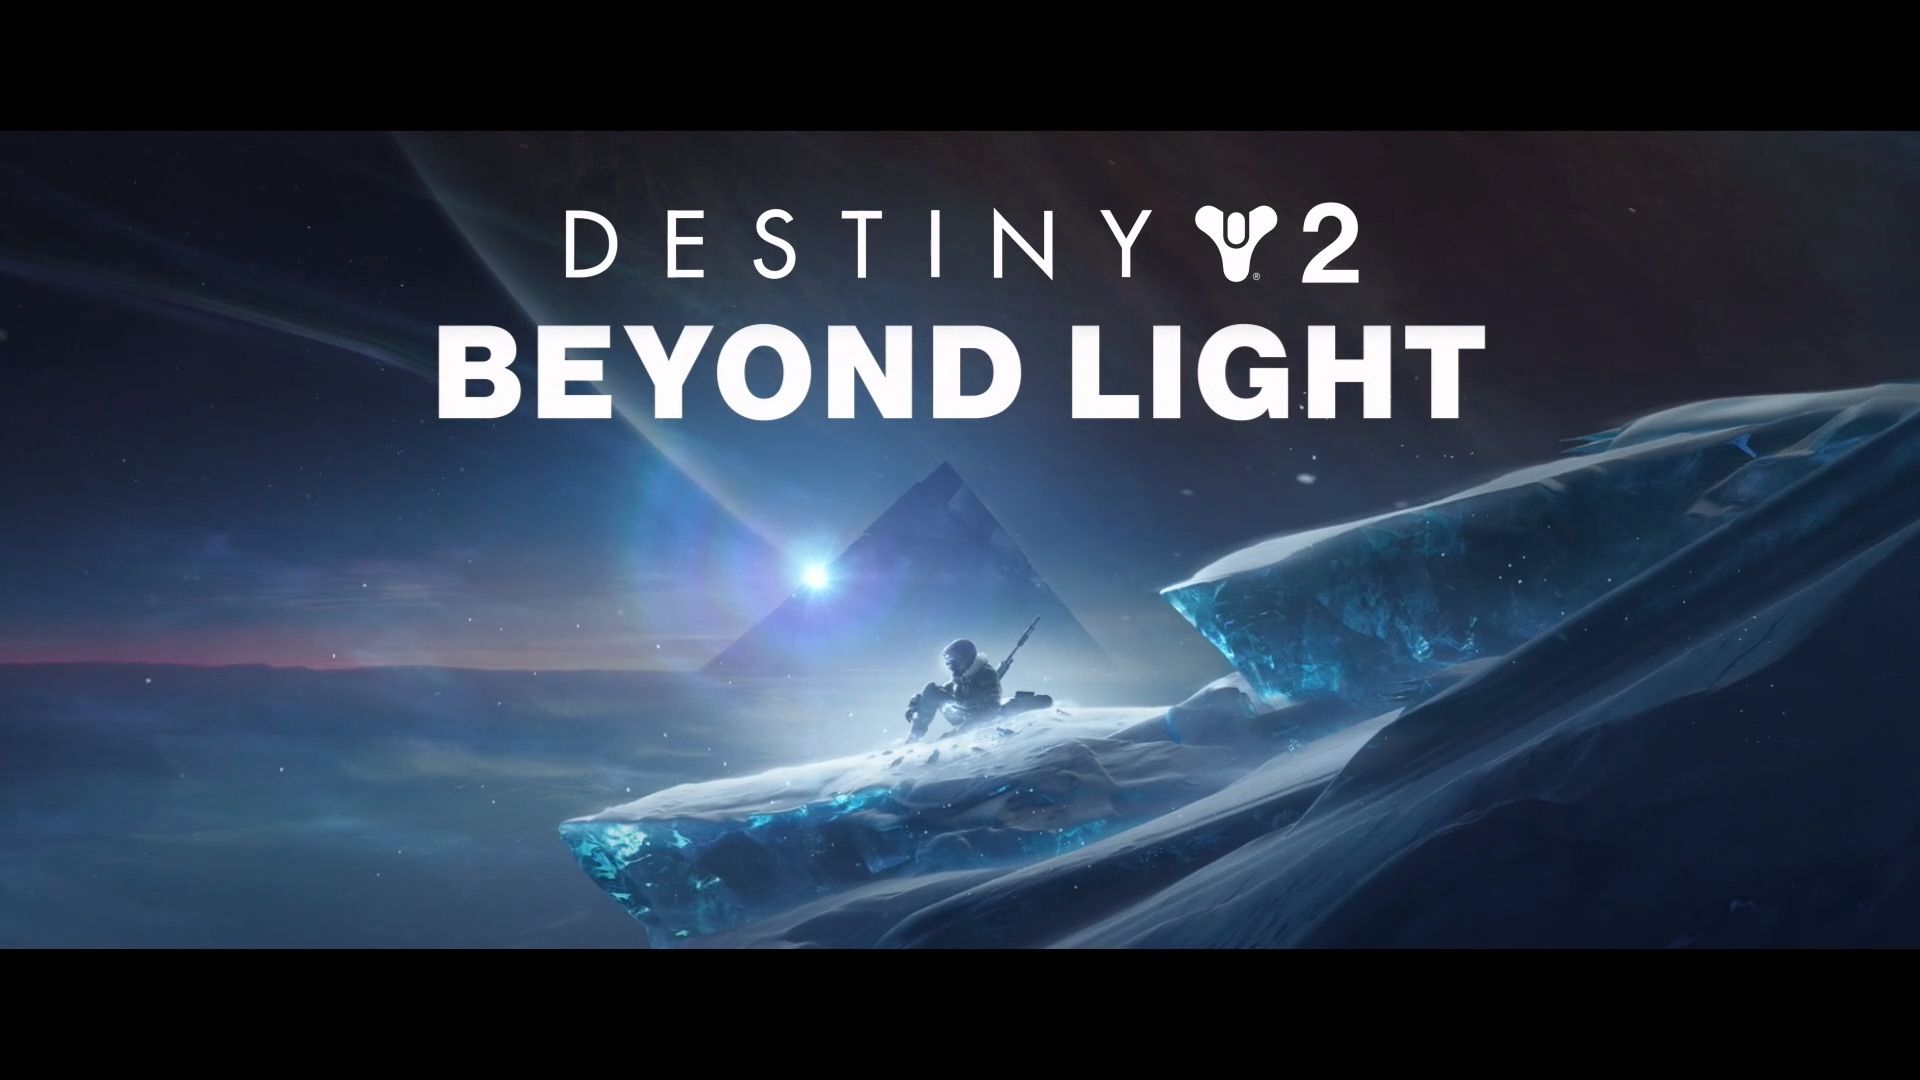 The future of Destiny 2 unveiled 2: Beyond Light